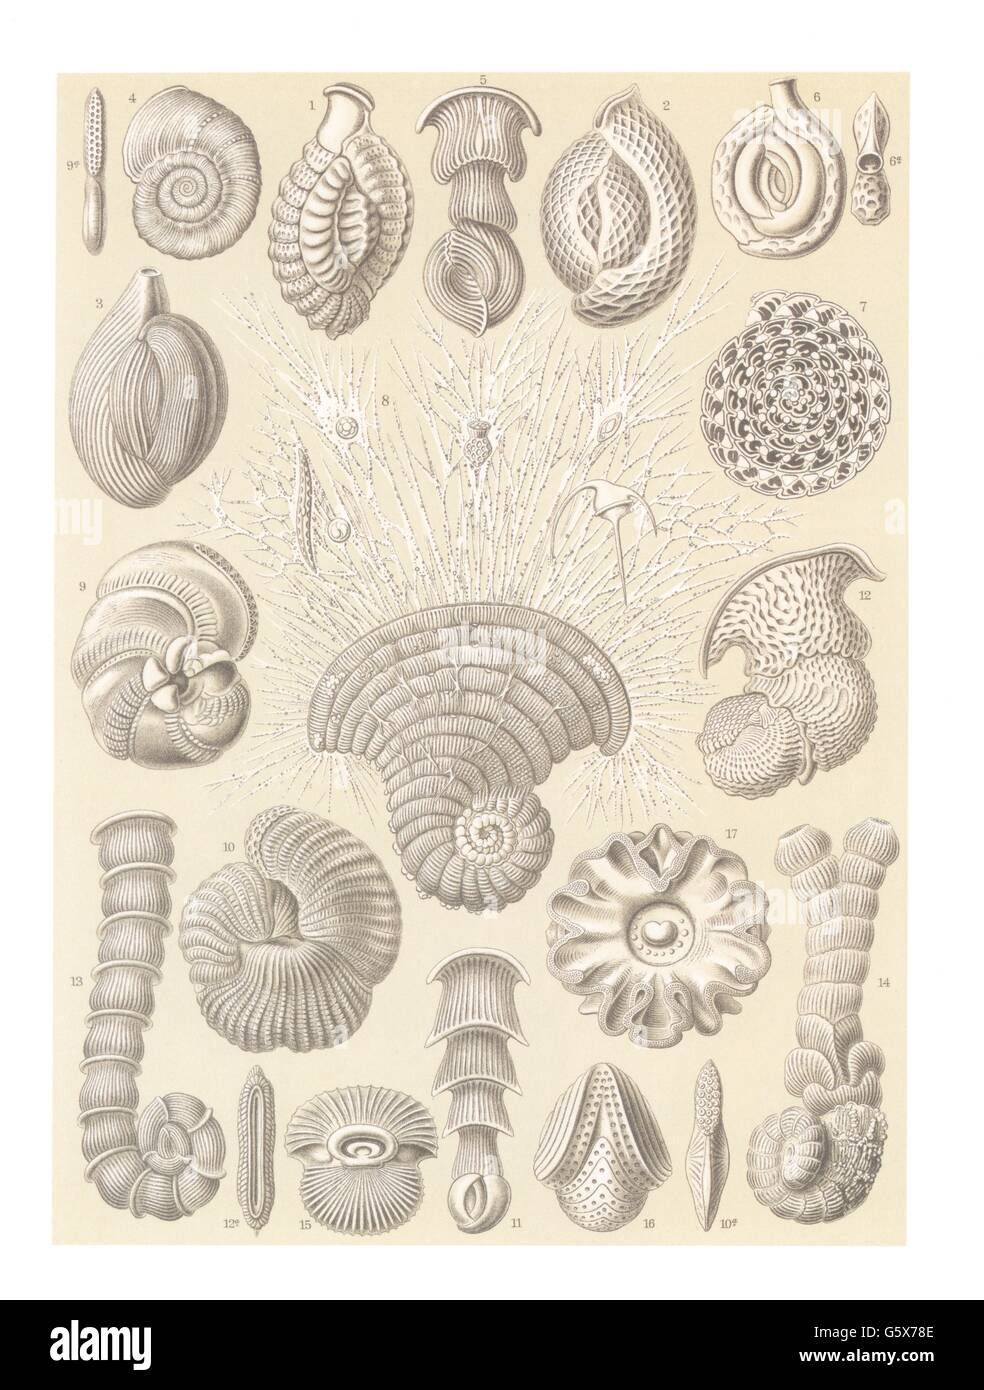 zoologie / Tiere, Foraminiferen (Foraminifera), Farblithographie, aus: Ernst Haeckel, 'Kunstformen der Natur', Leipzig - Wien, 1899 - 1904, Additional-Rights-Clearences-not available Stockfoto